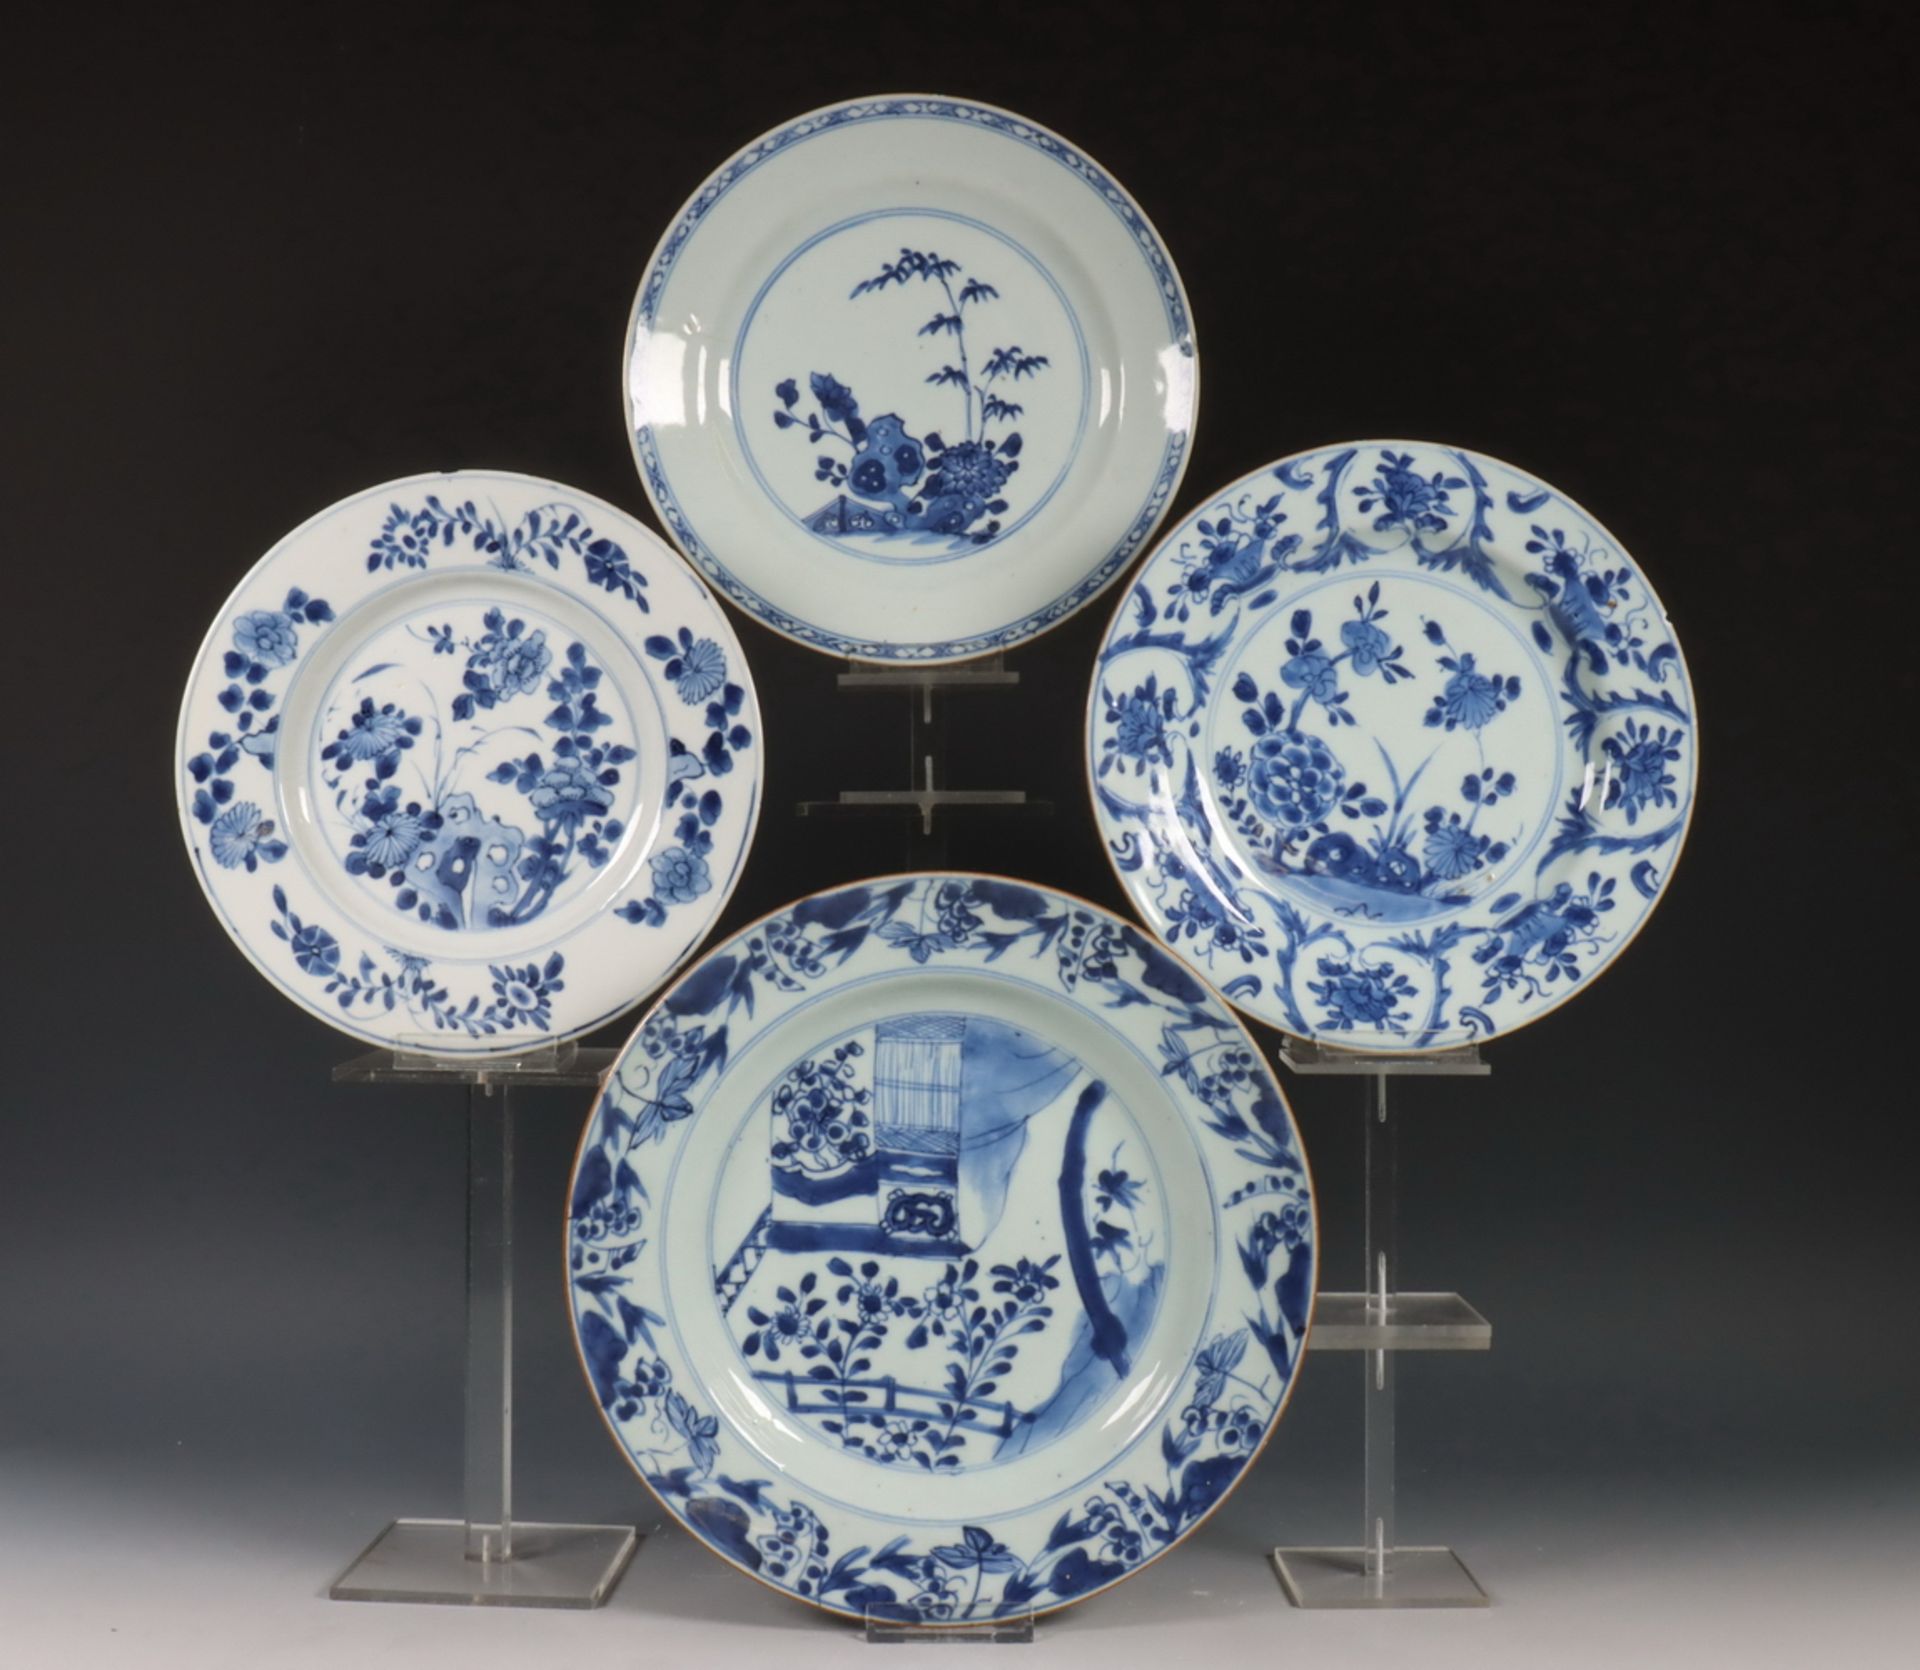 China, vier blauw-wit porseleinen borden, 18e eeuw,